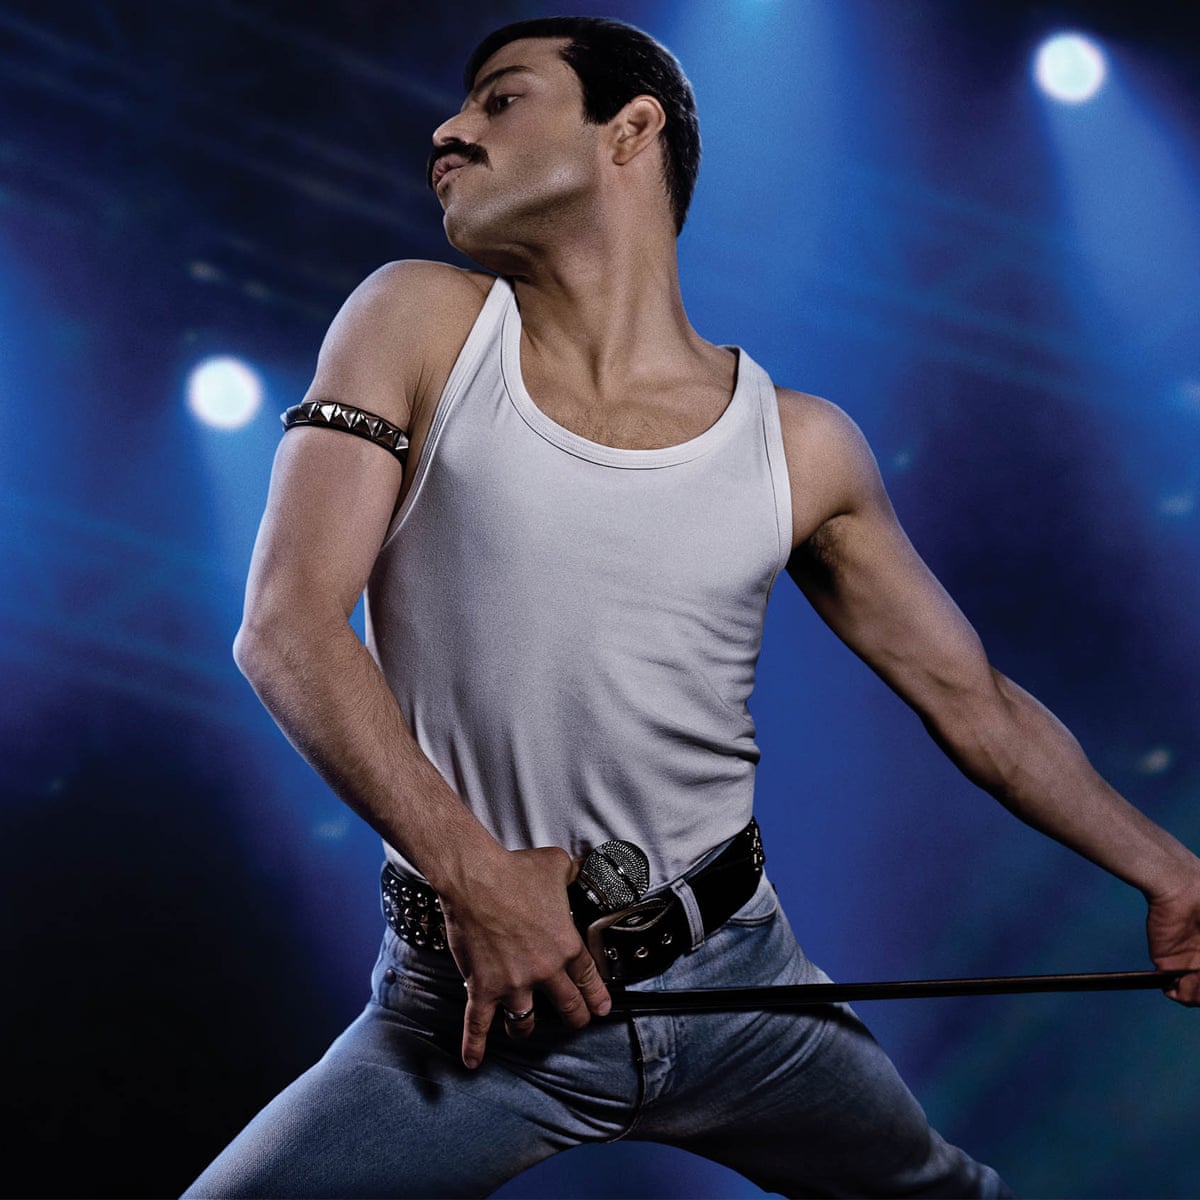 Bohemian Rhapsody: will the Freddie Mercury biopic be a whitewash